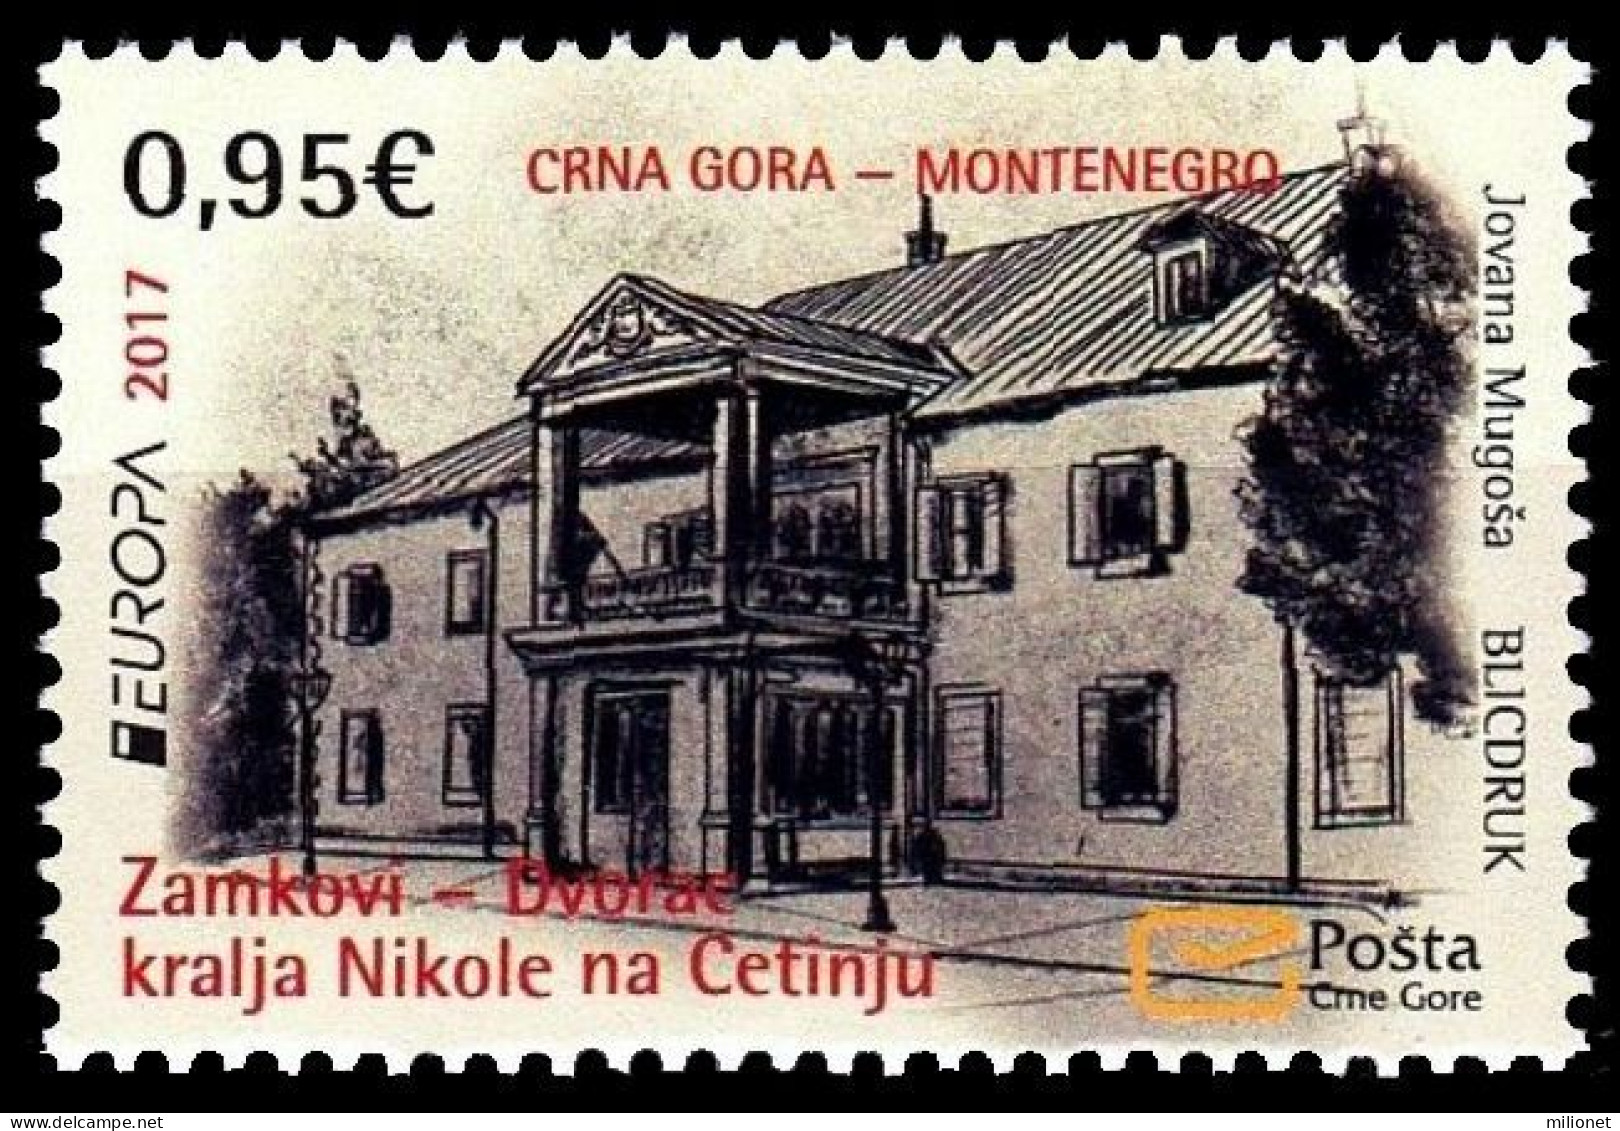 SALE!!! MONTENEGRO CRNA GORA 2017 EUROPA CEPT CASTLES 1 Stamp Set MNH ** - 2017